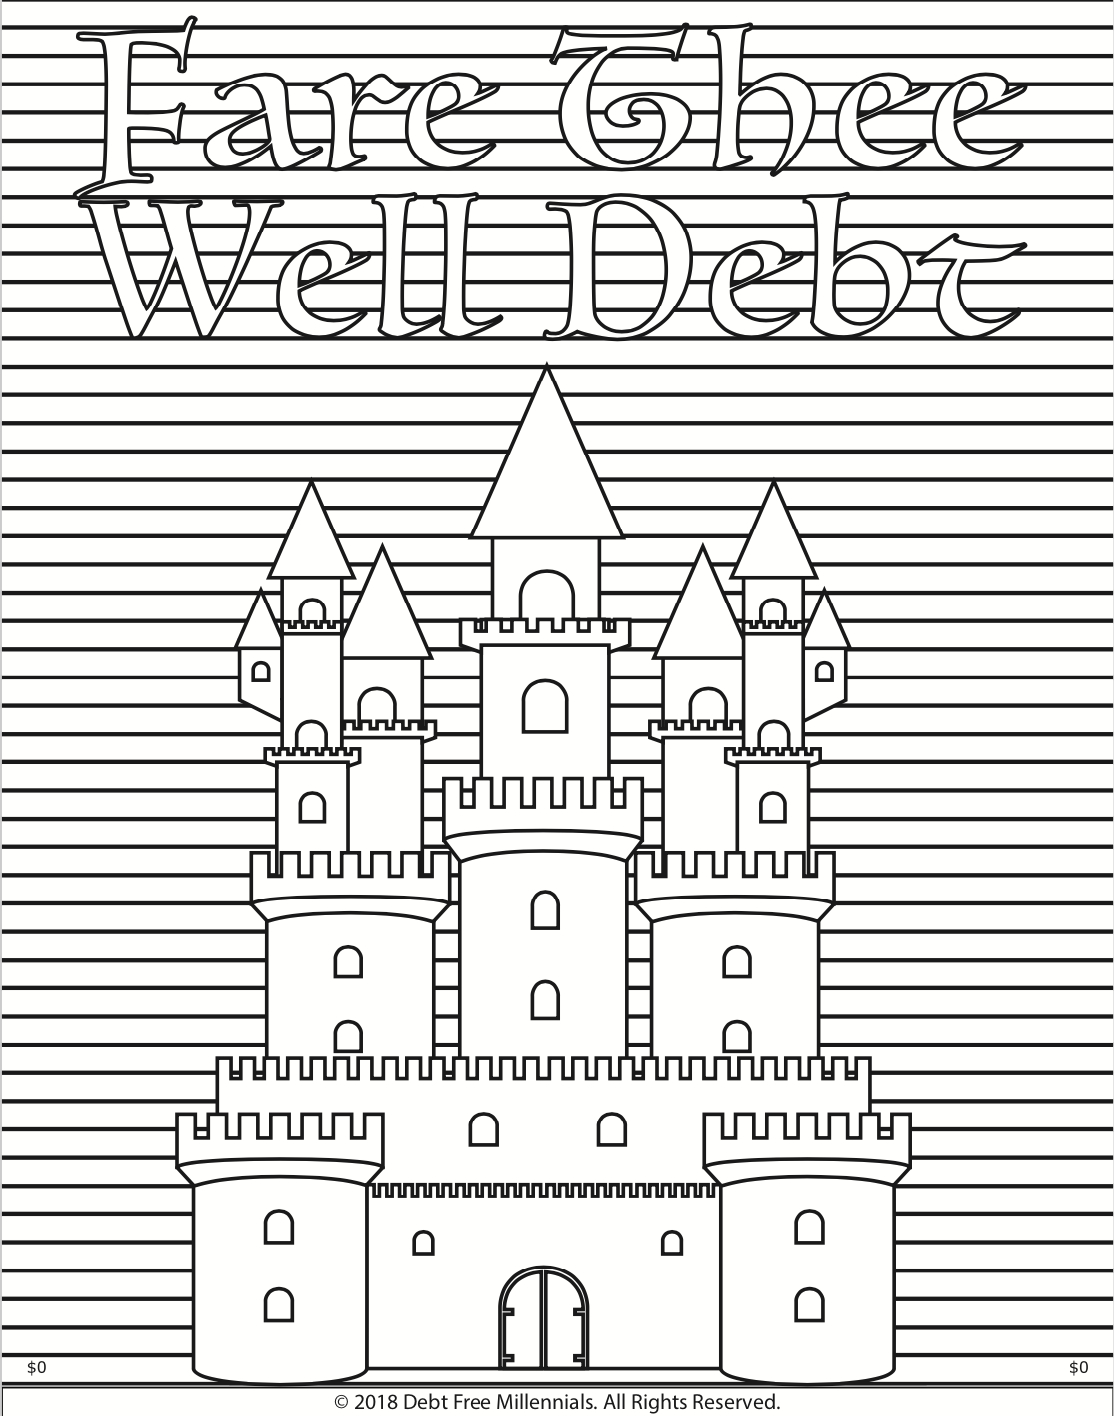 Debt Free Charts - Debt Free Millennials - Free Printable Debt Free Charts